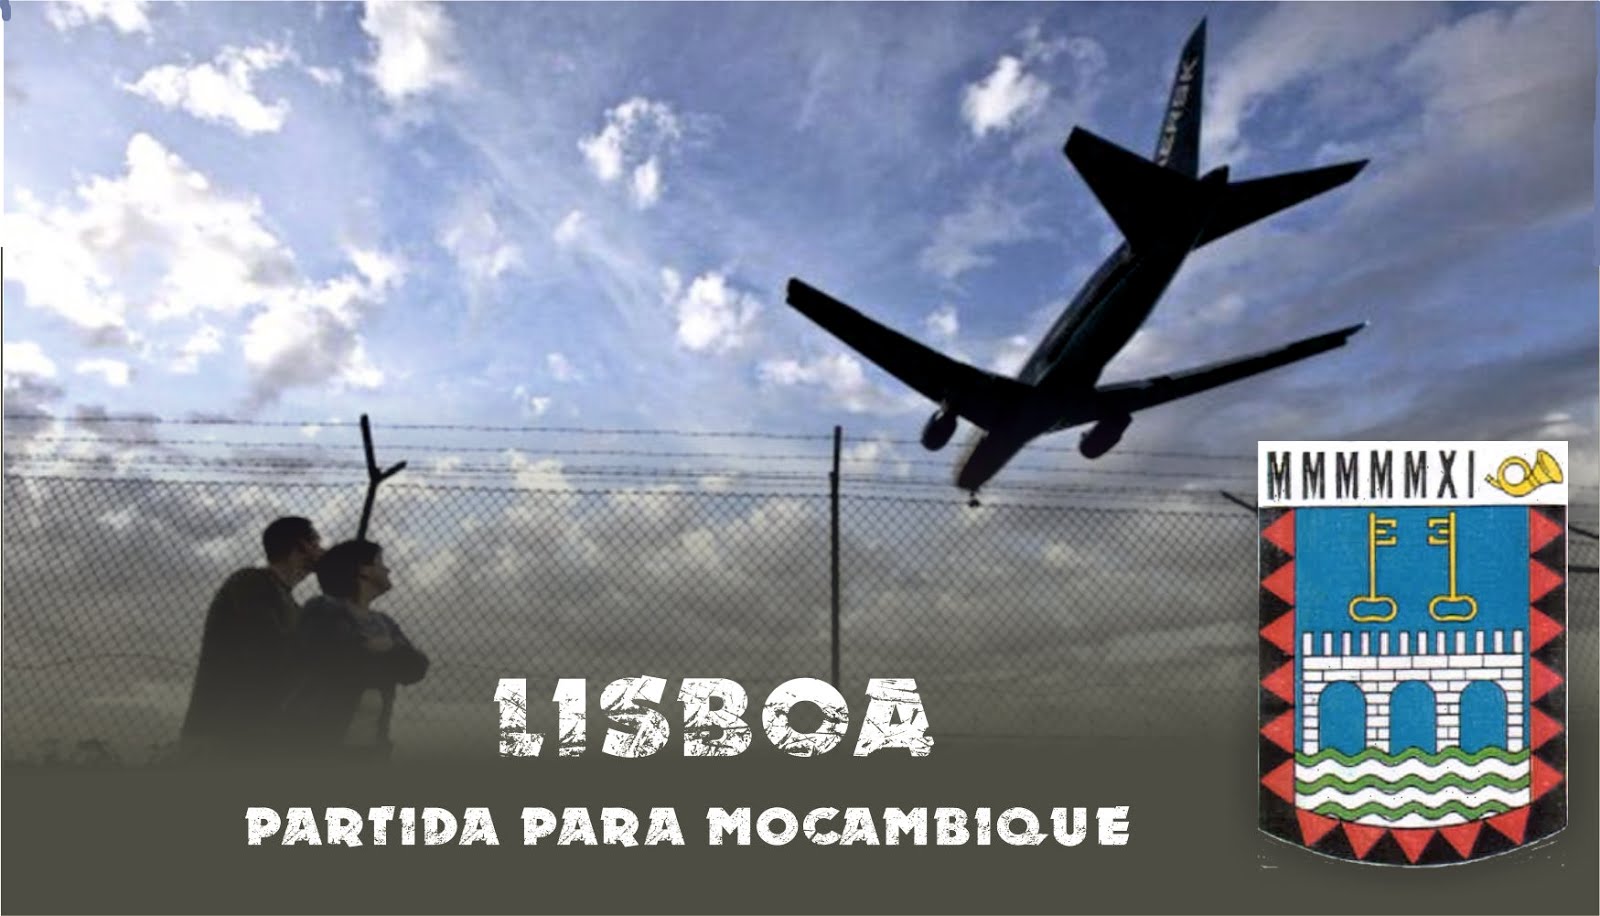 Lisboa - partida para Moçambique